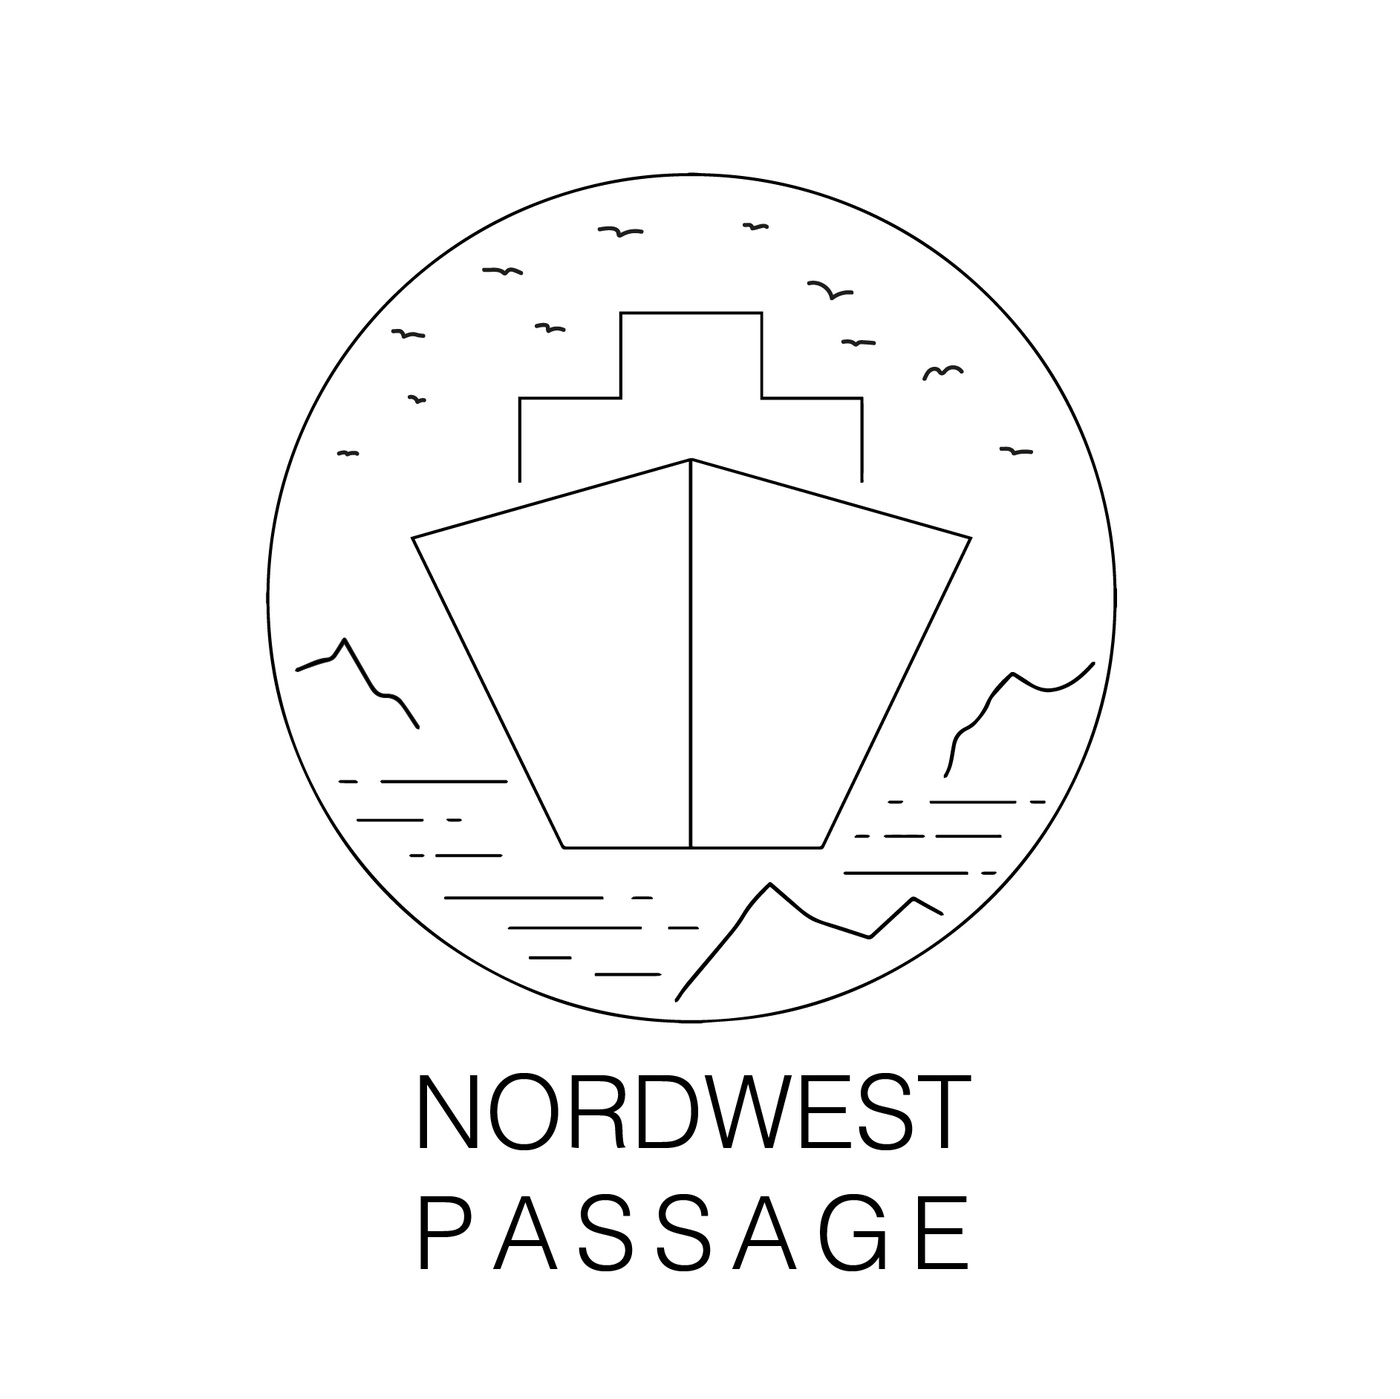 Nordwest Passage